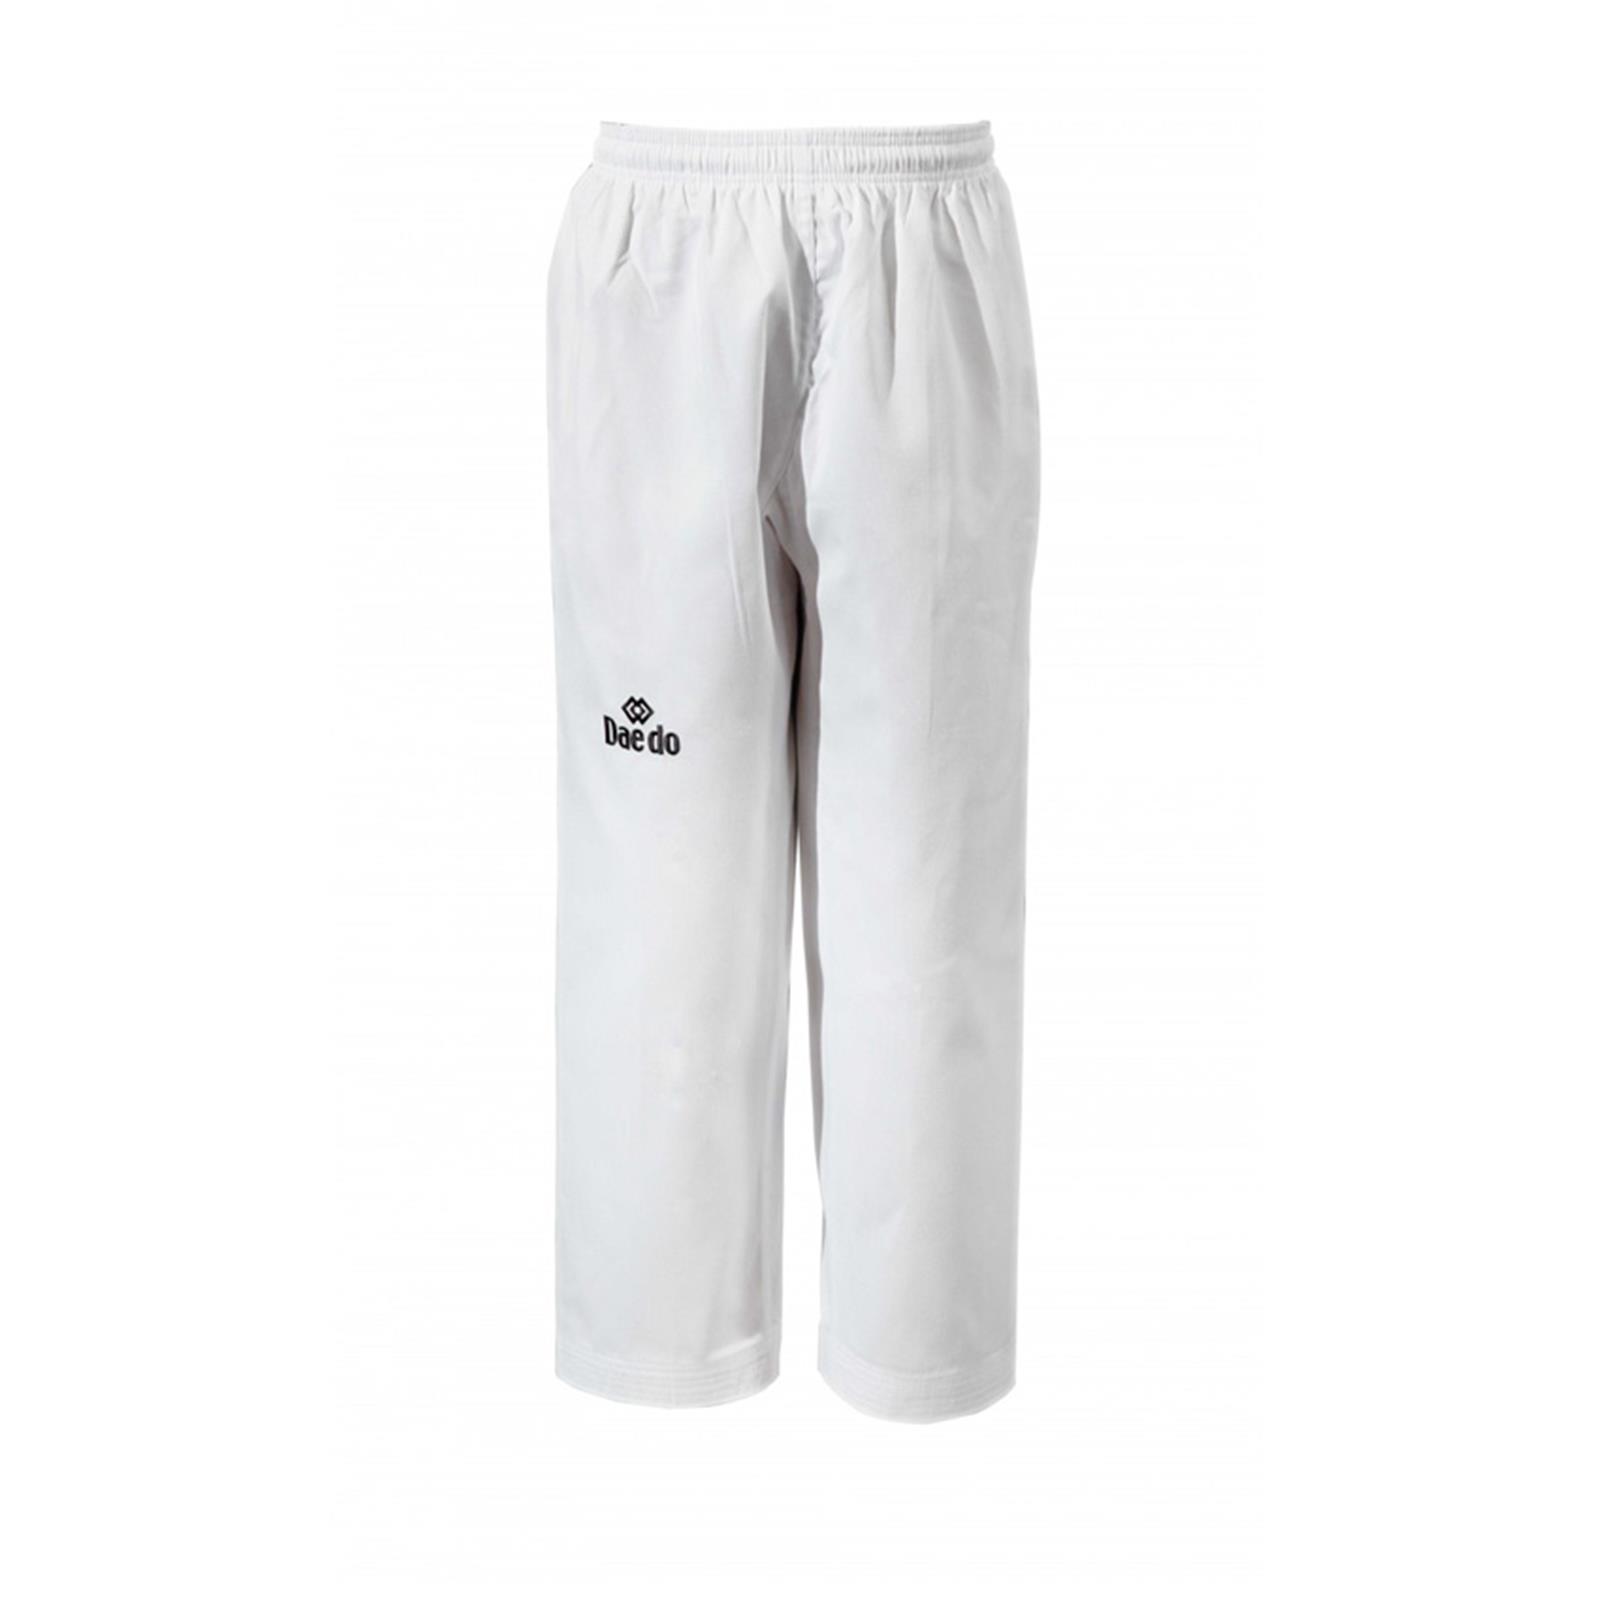 Dae Do Pantalone per Dobok Bianco (4° - 170cm - BIANCO)